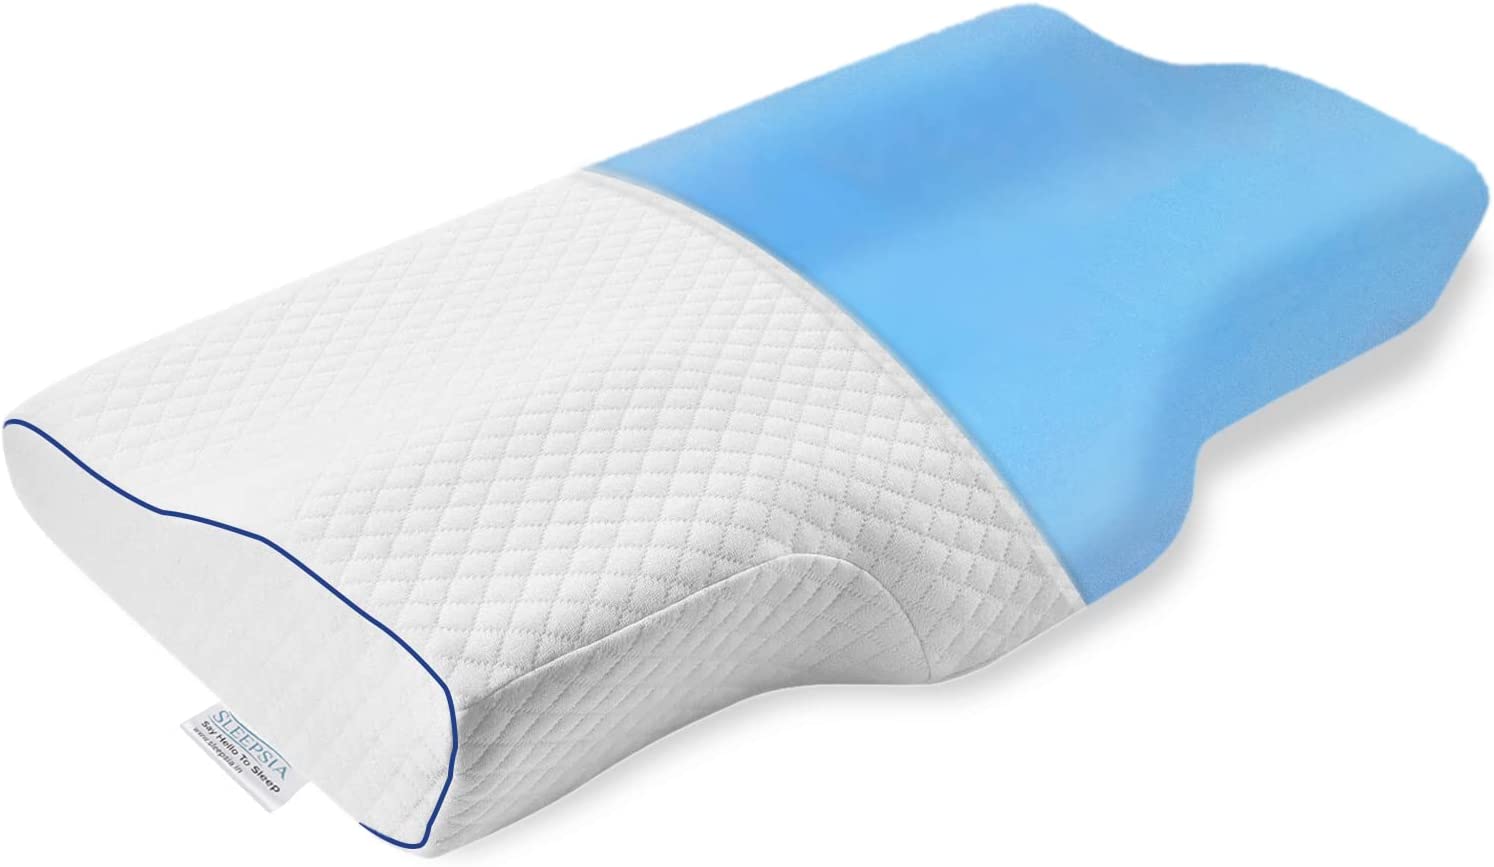 An Orthopedic Memory Foam Pillow: Why You Need?